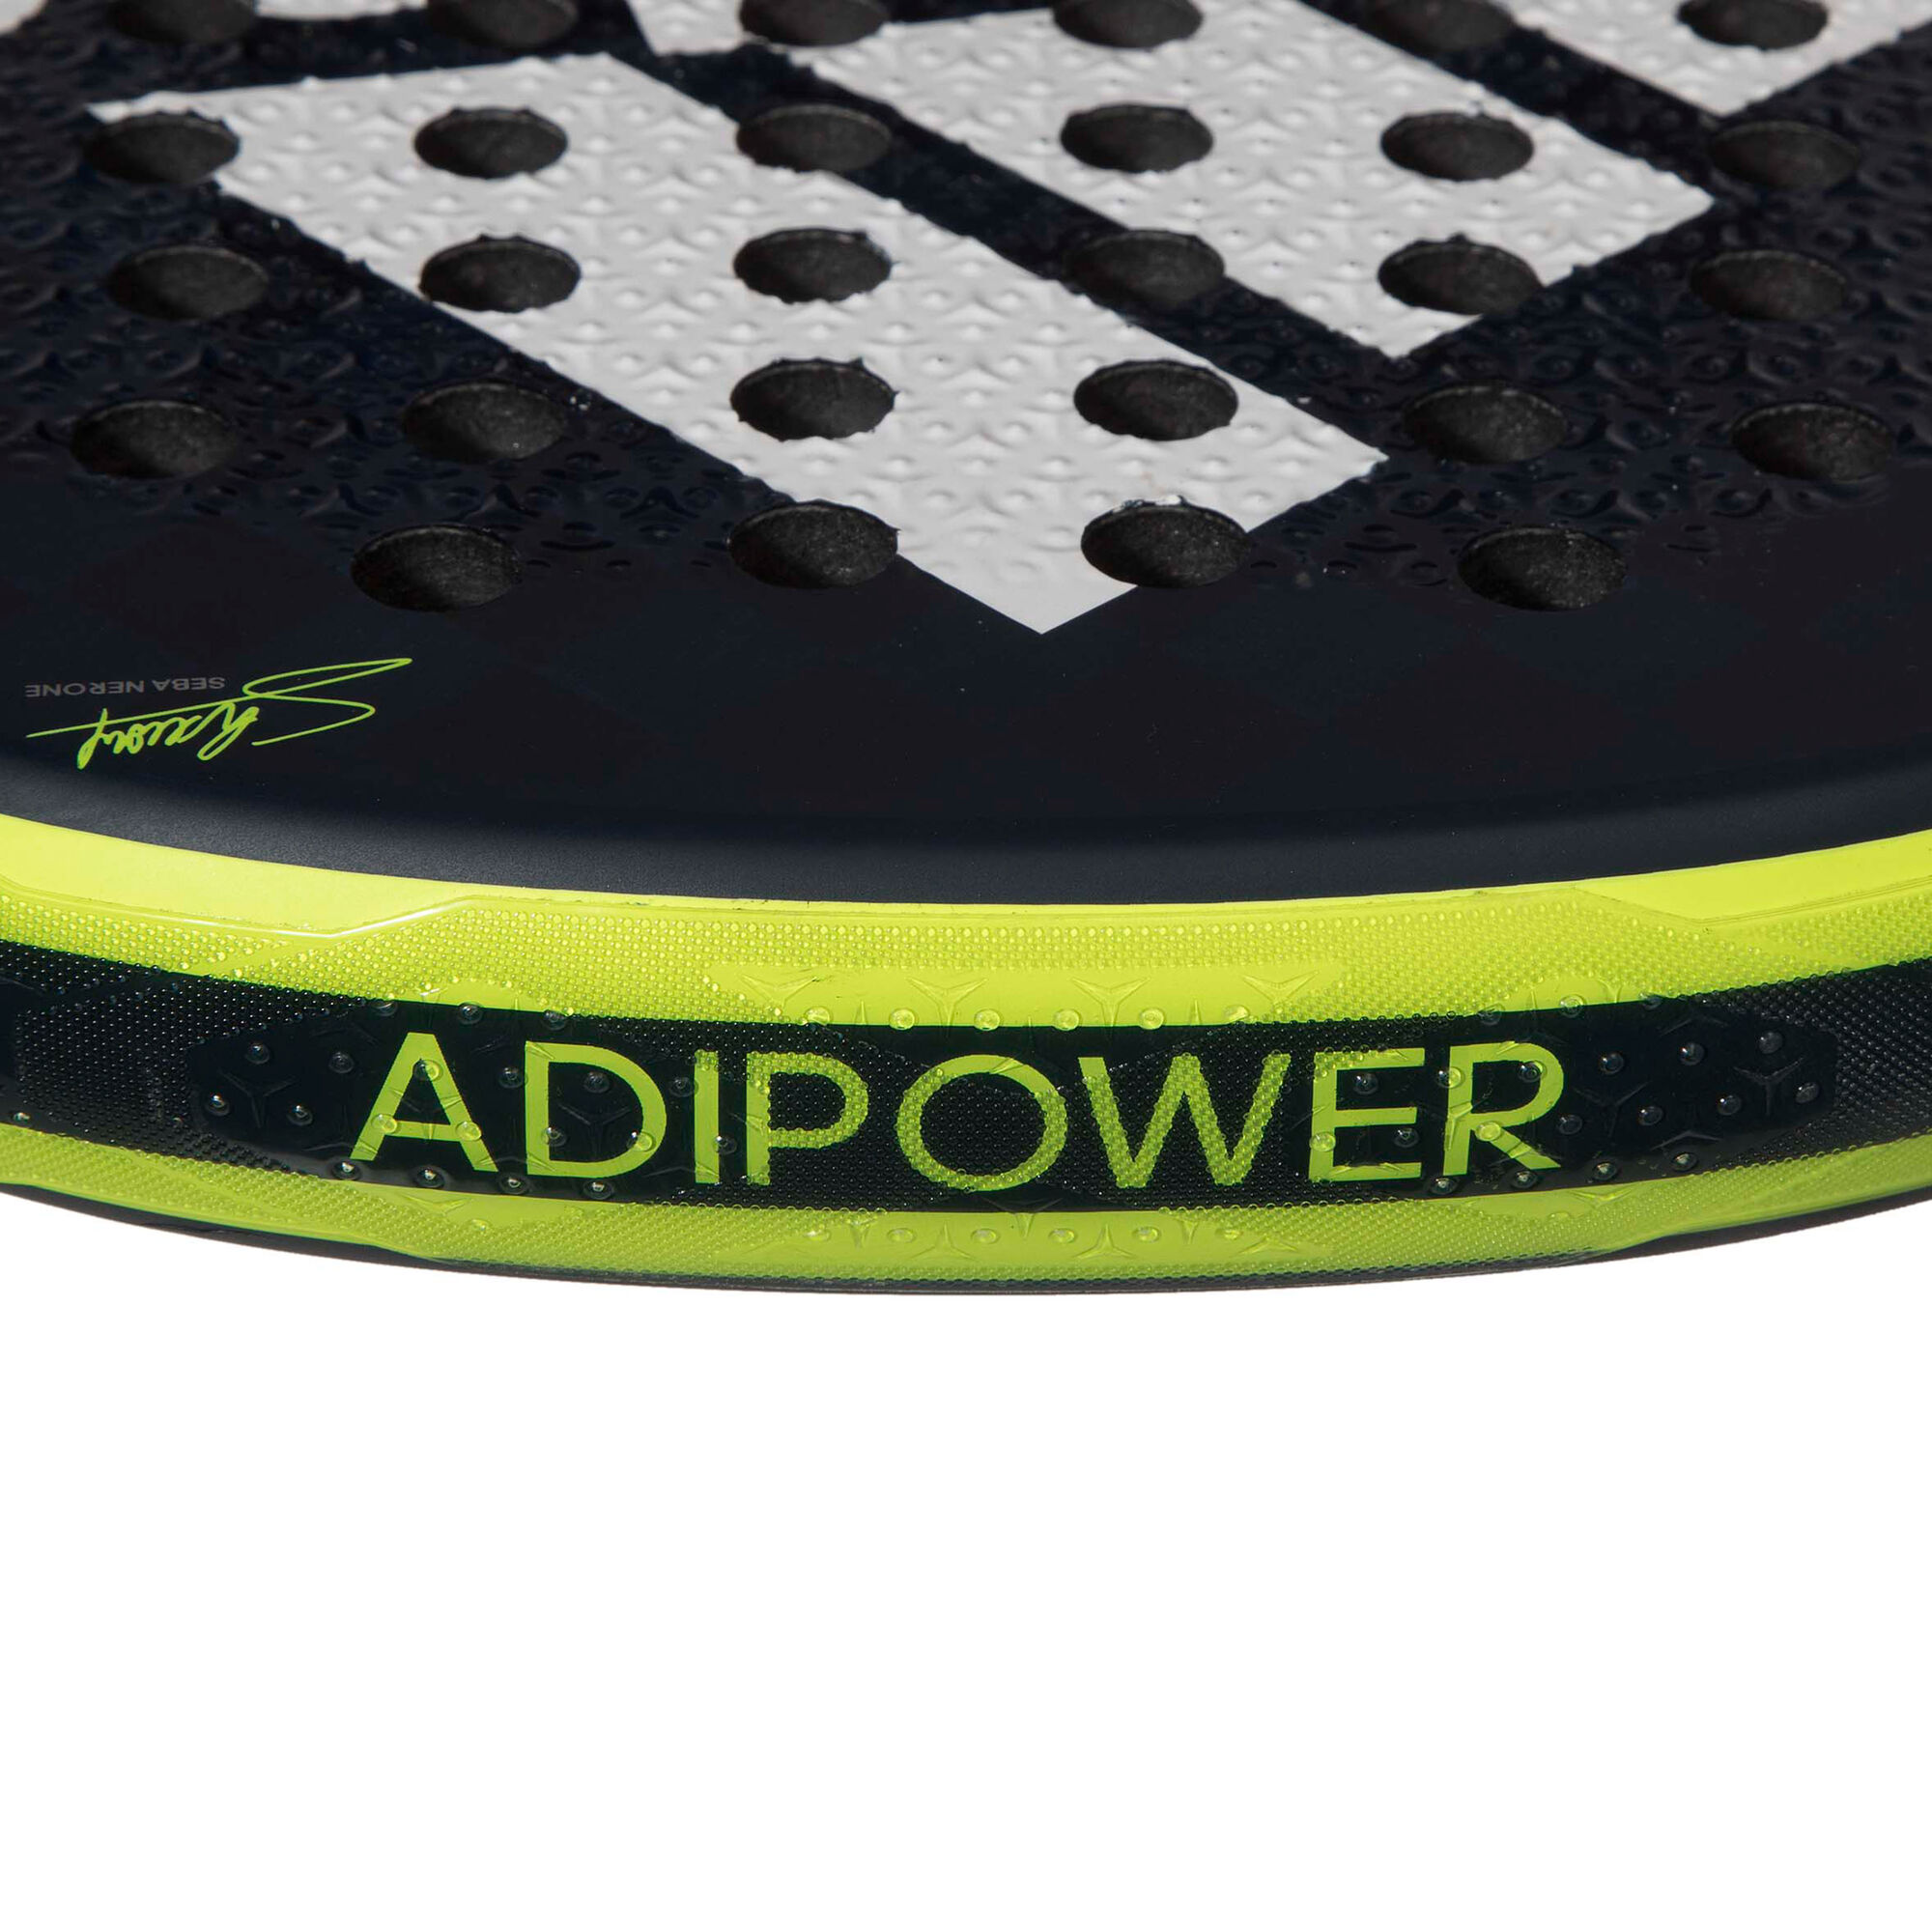 buy adidas Adipower 3.1 online |